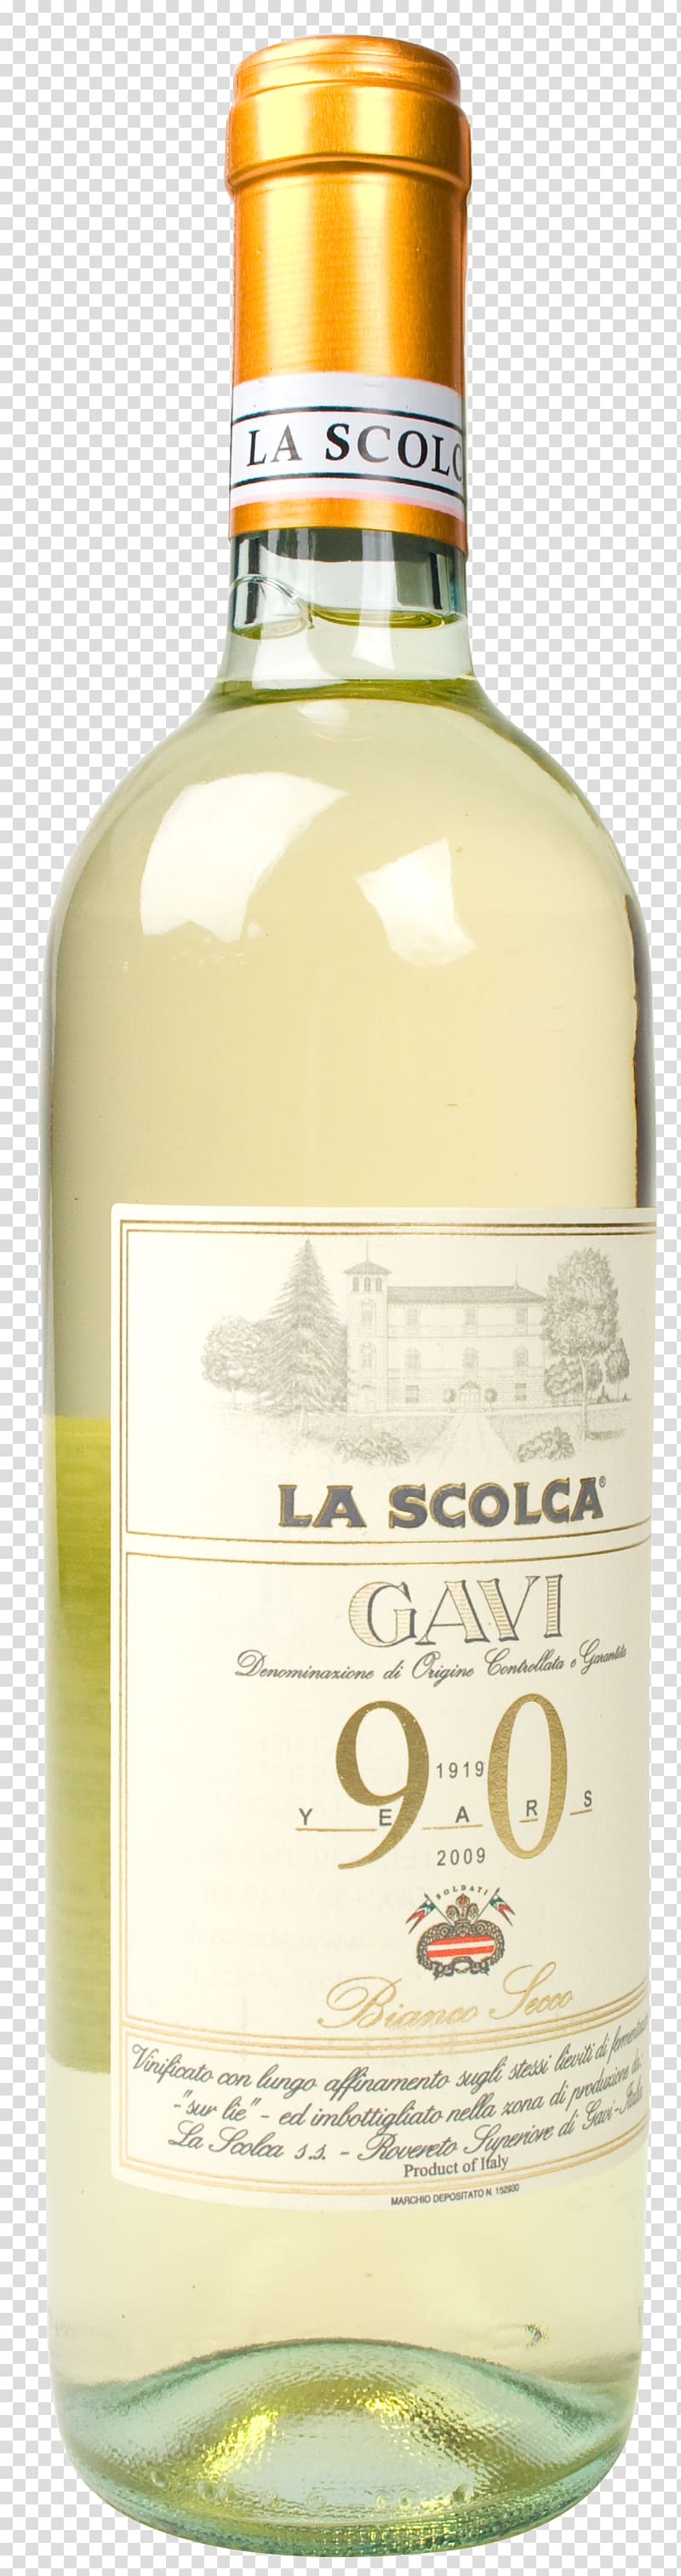 Gavi, Piedmont La Scolca Liqueur White wine Label, Gavião arqueiro transparent background PNG clipart